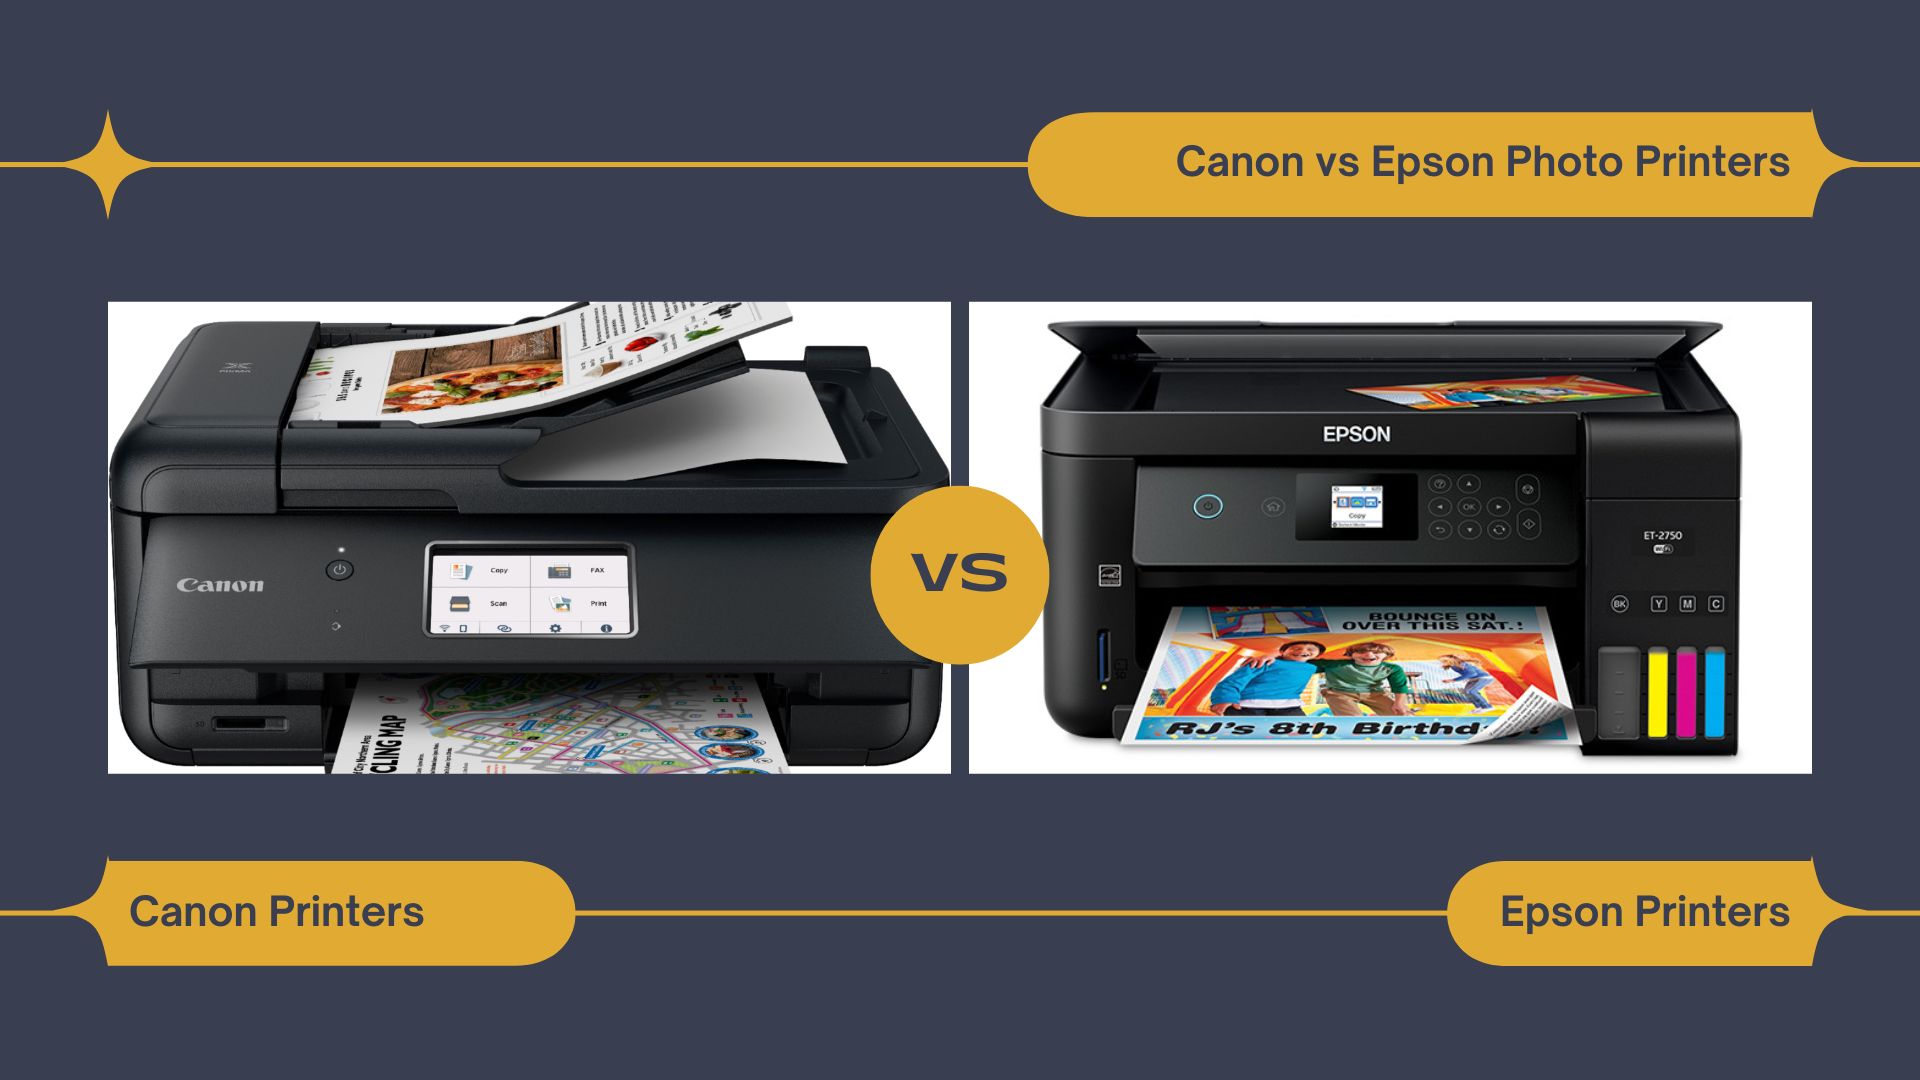 Canon vs Epson Photo Printers